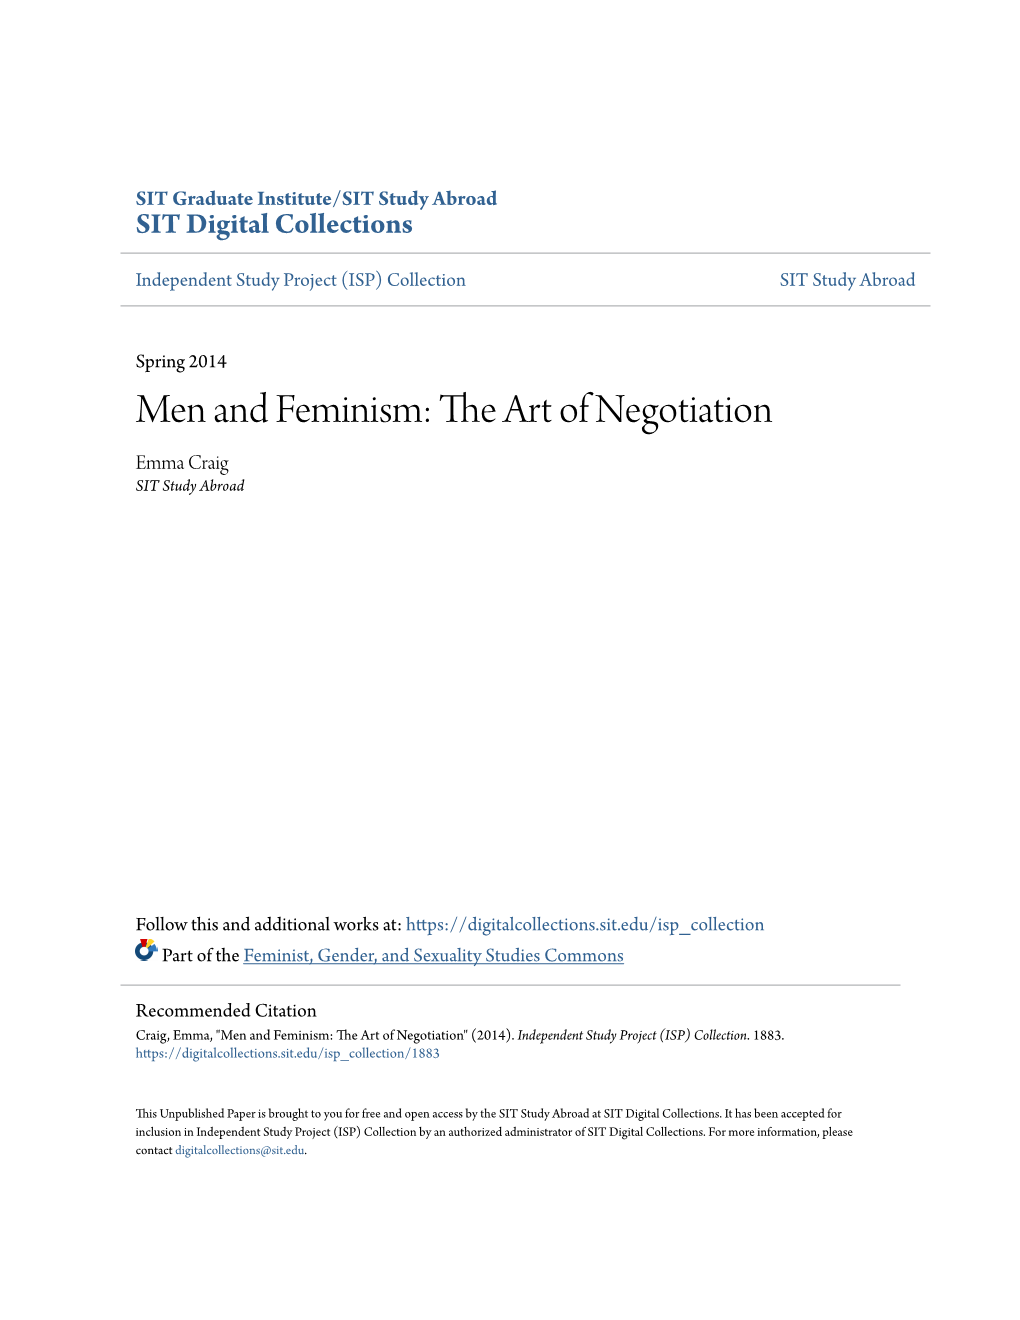 Men and Feminism: the Art of Negotiation Emma Craig SIT Study Abroad